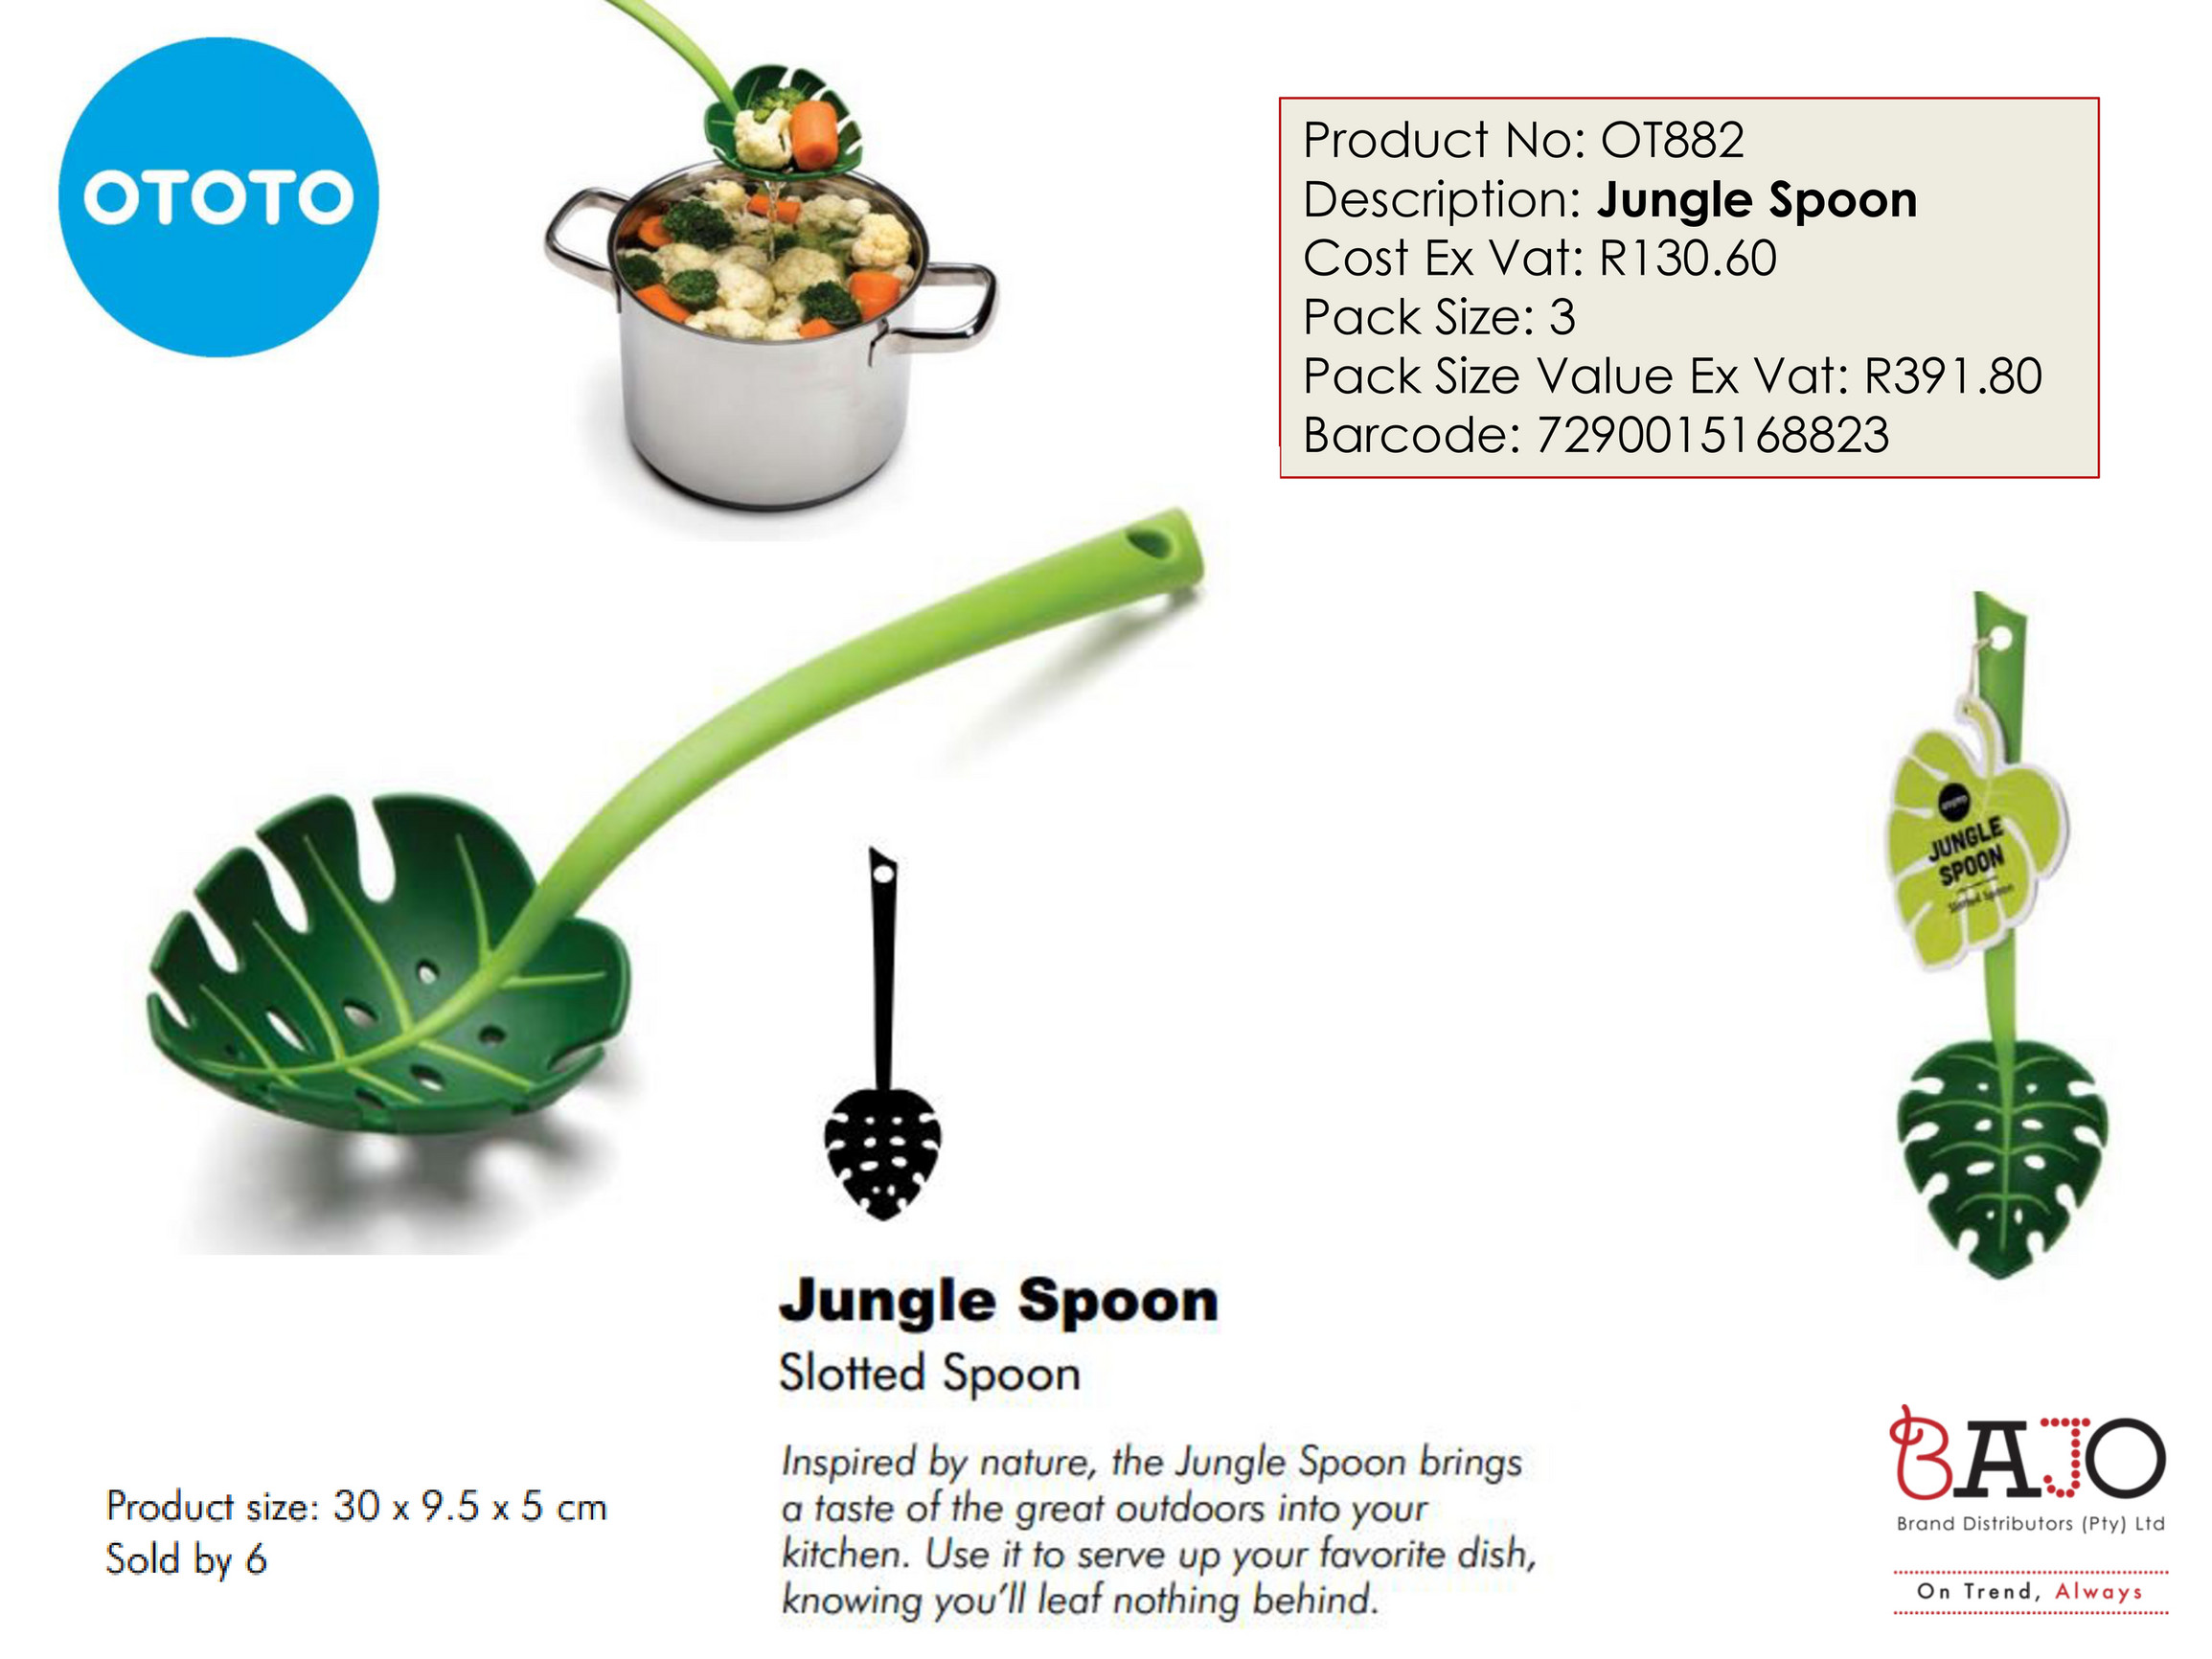 OTOTO Jungle Spoon Slotted Spoon